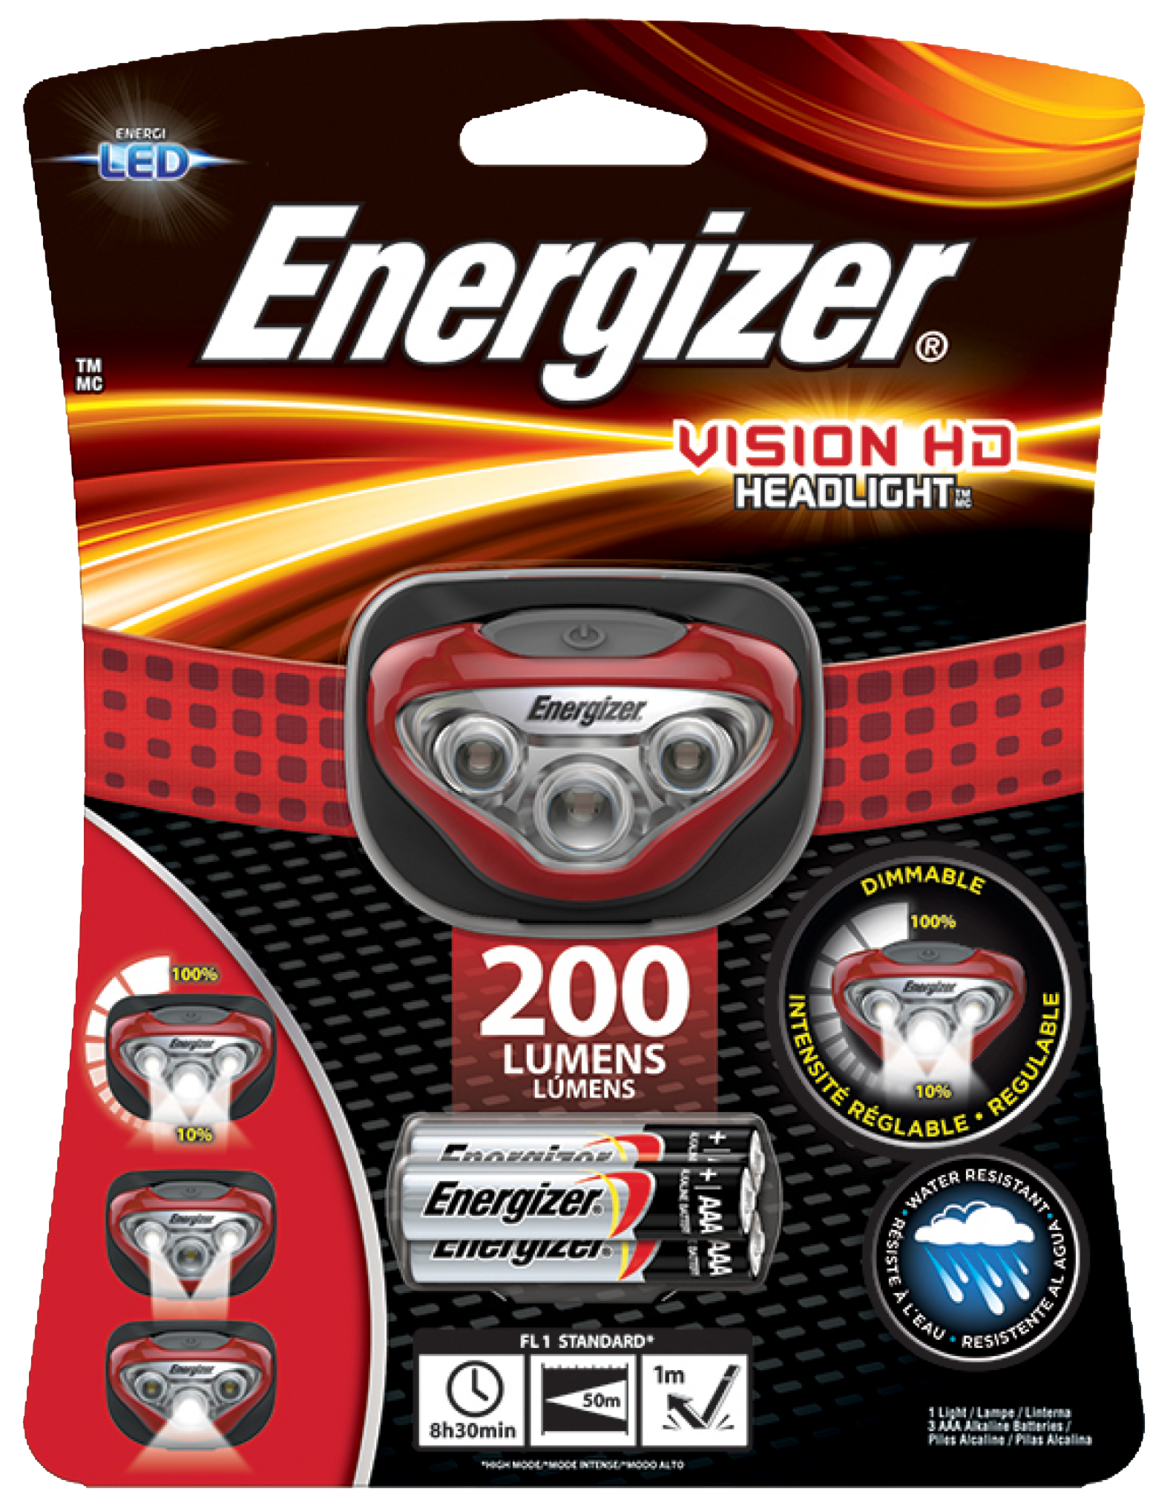 Energizer HDB32E Vision HD Headlight, LED Lamp, 180 Lumens*